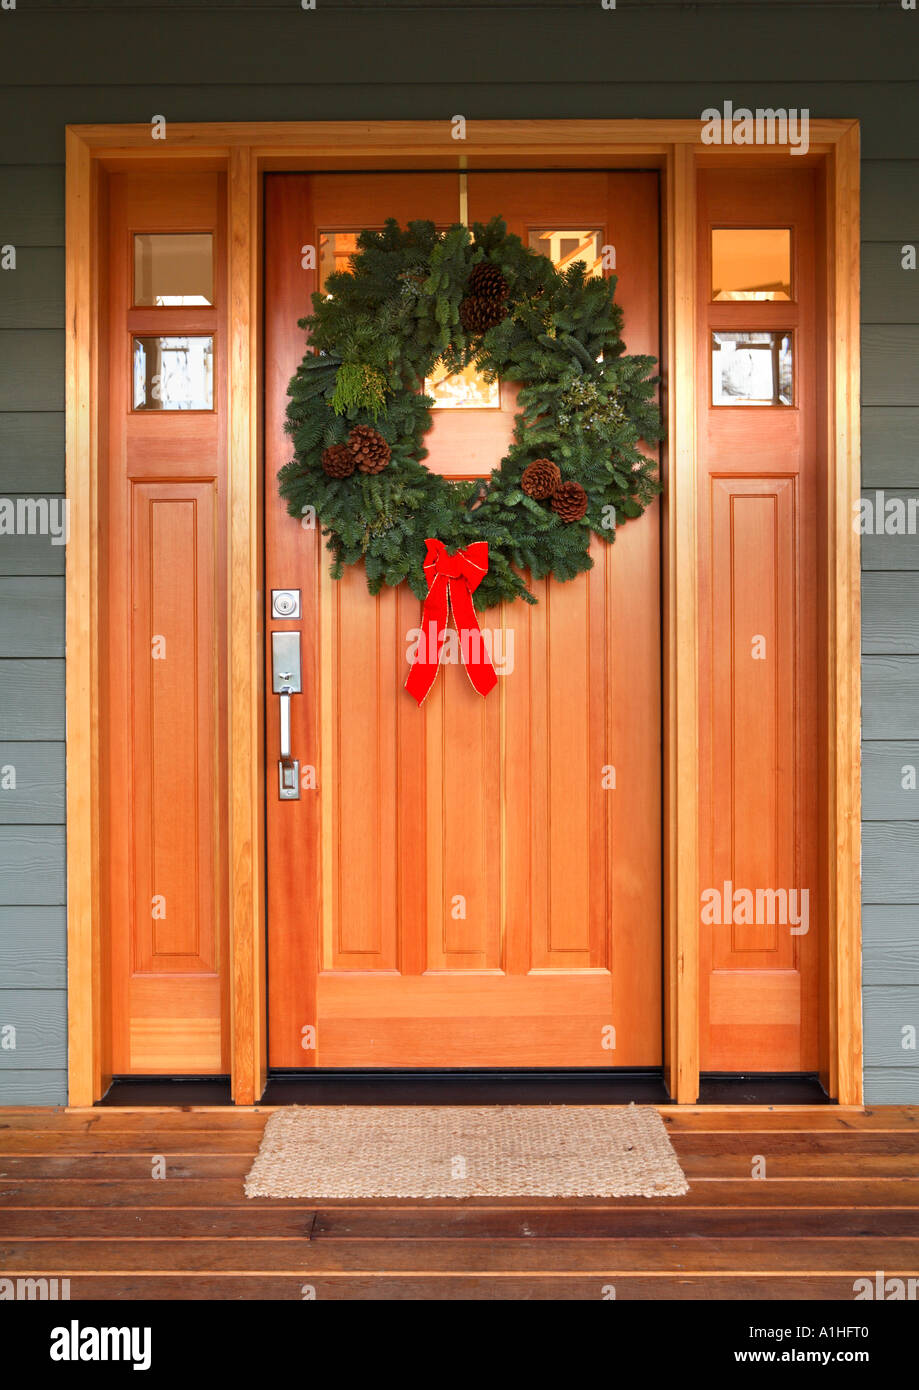 Christmas wreath on front door of home. Stock Photo